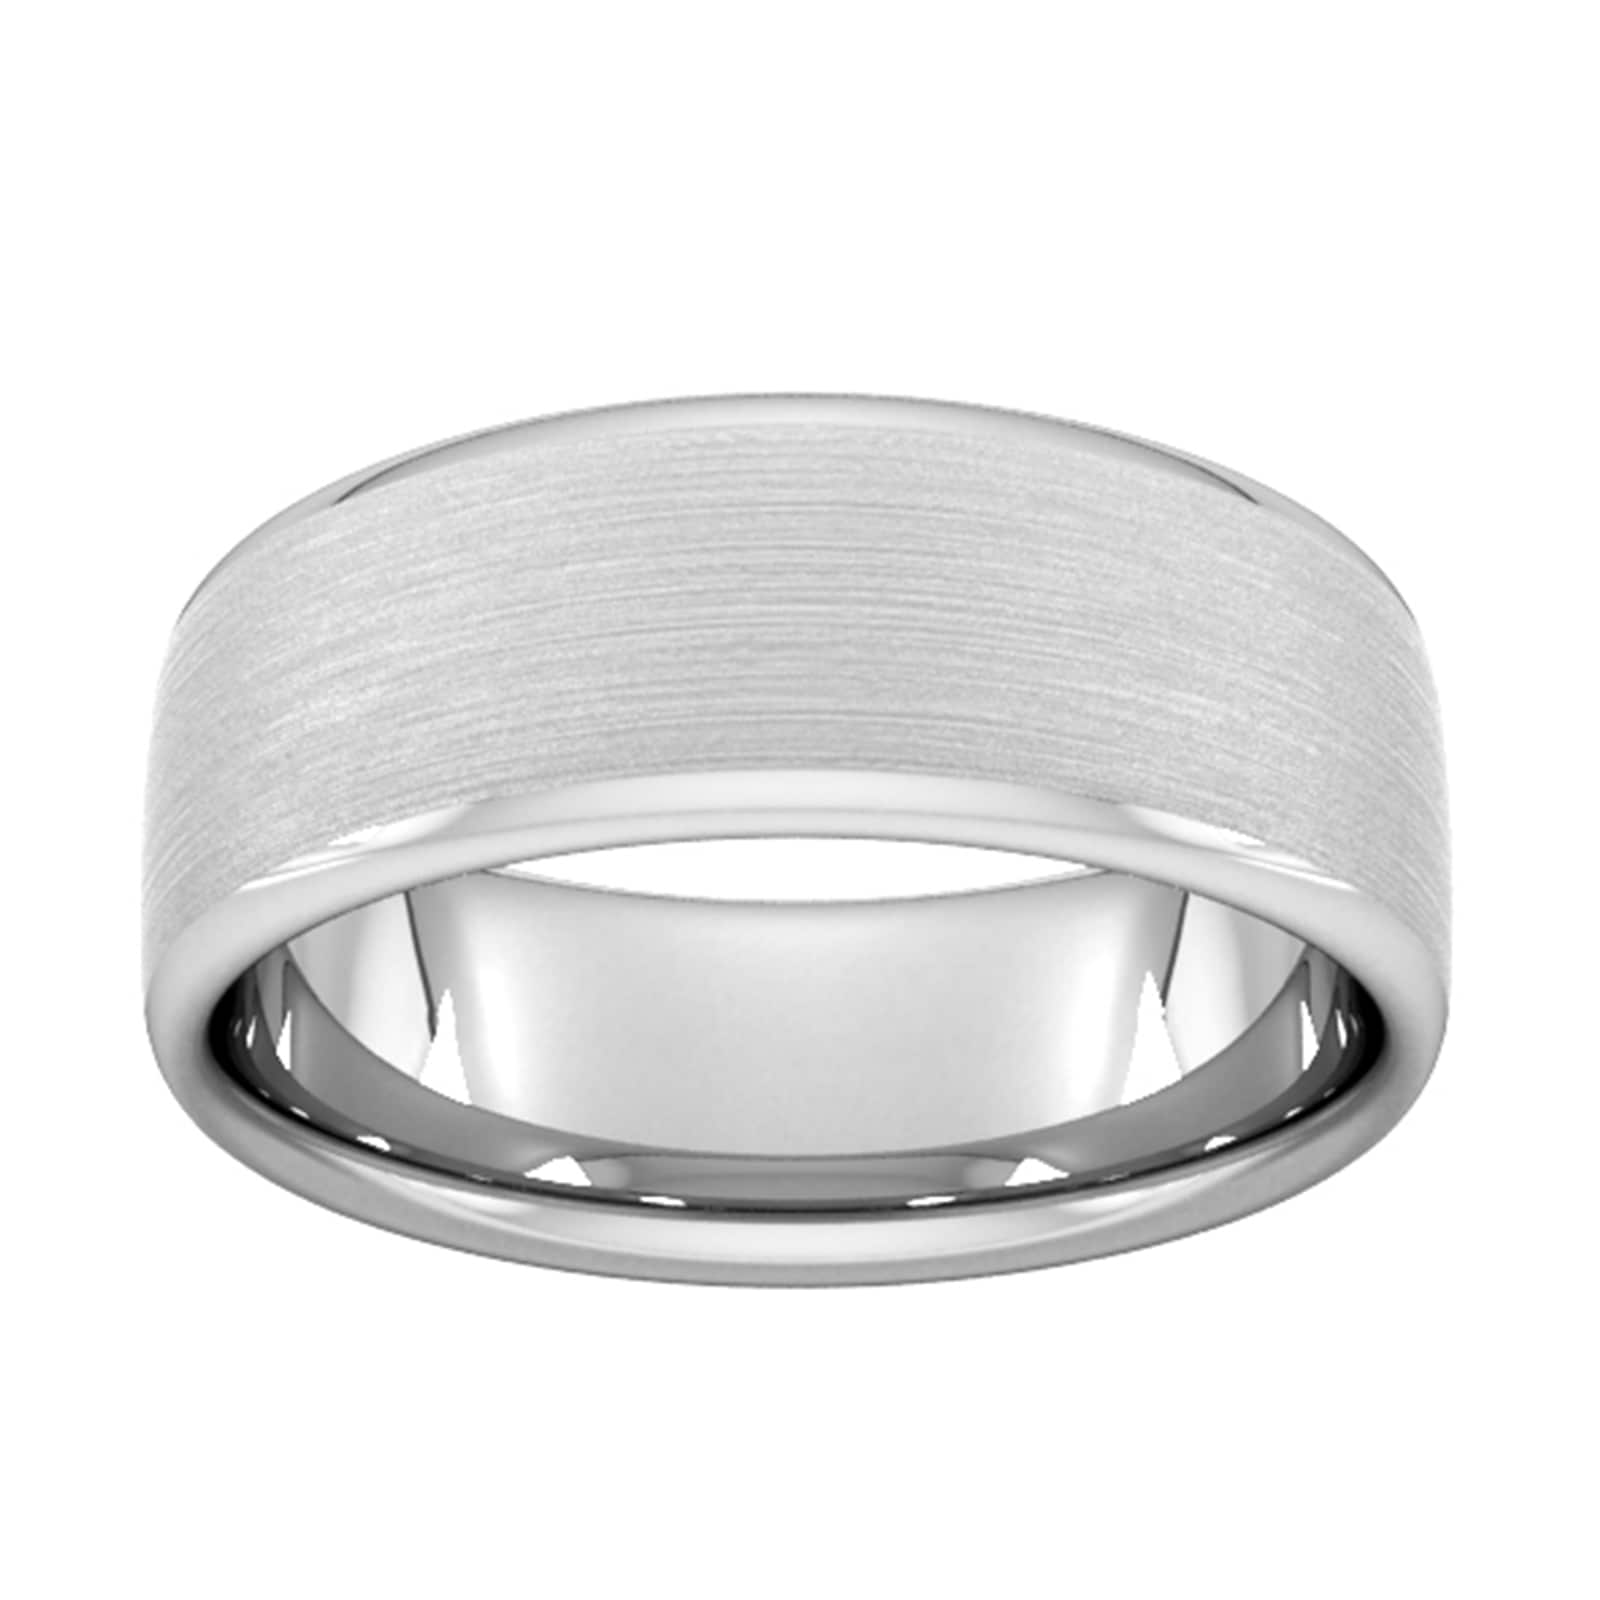 8mm D Shape Standard Matt Finished Wedding Ring In 950 Palladium - Ring Size V